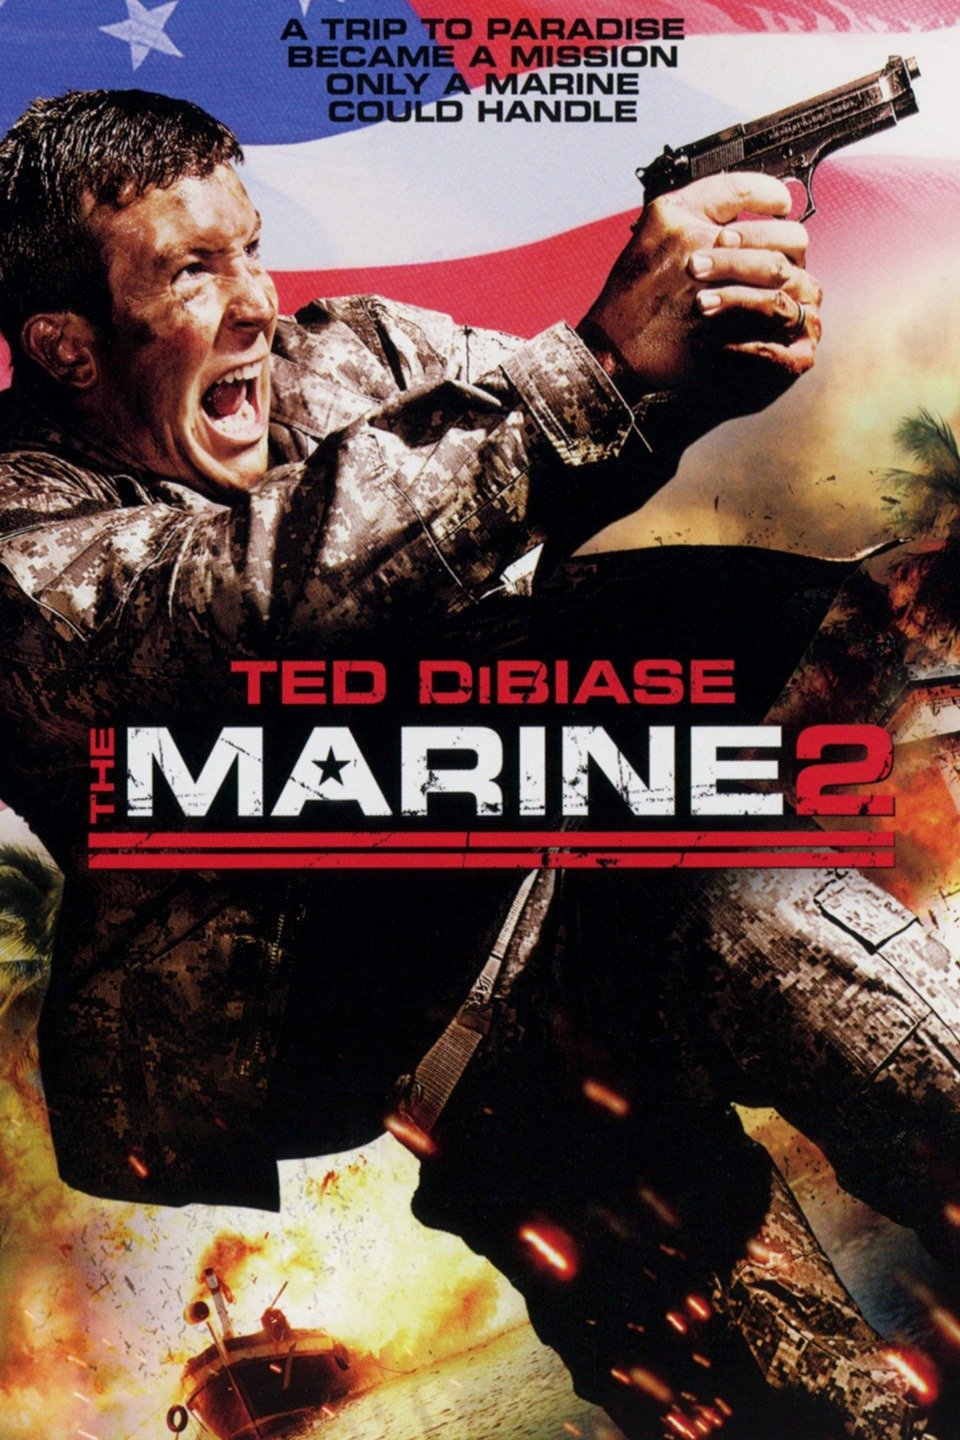 [MINI-HD] The Marine 2 (2009) เดอะ มารีน คนคลั่งล่าทะลุสุดขีดนรก ภาค 2 [1080p] [พากย์ไทย 5.1 + เสียงอังกฤษ 5.1] [บรรยายไทย] [เสียงไทย + ซับไทย] [ONE2UP]